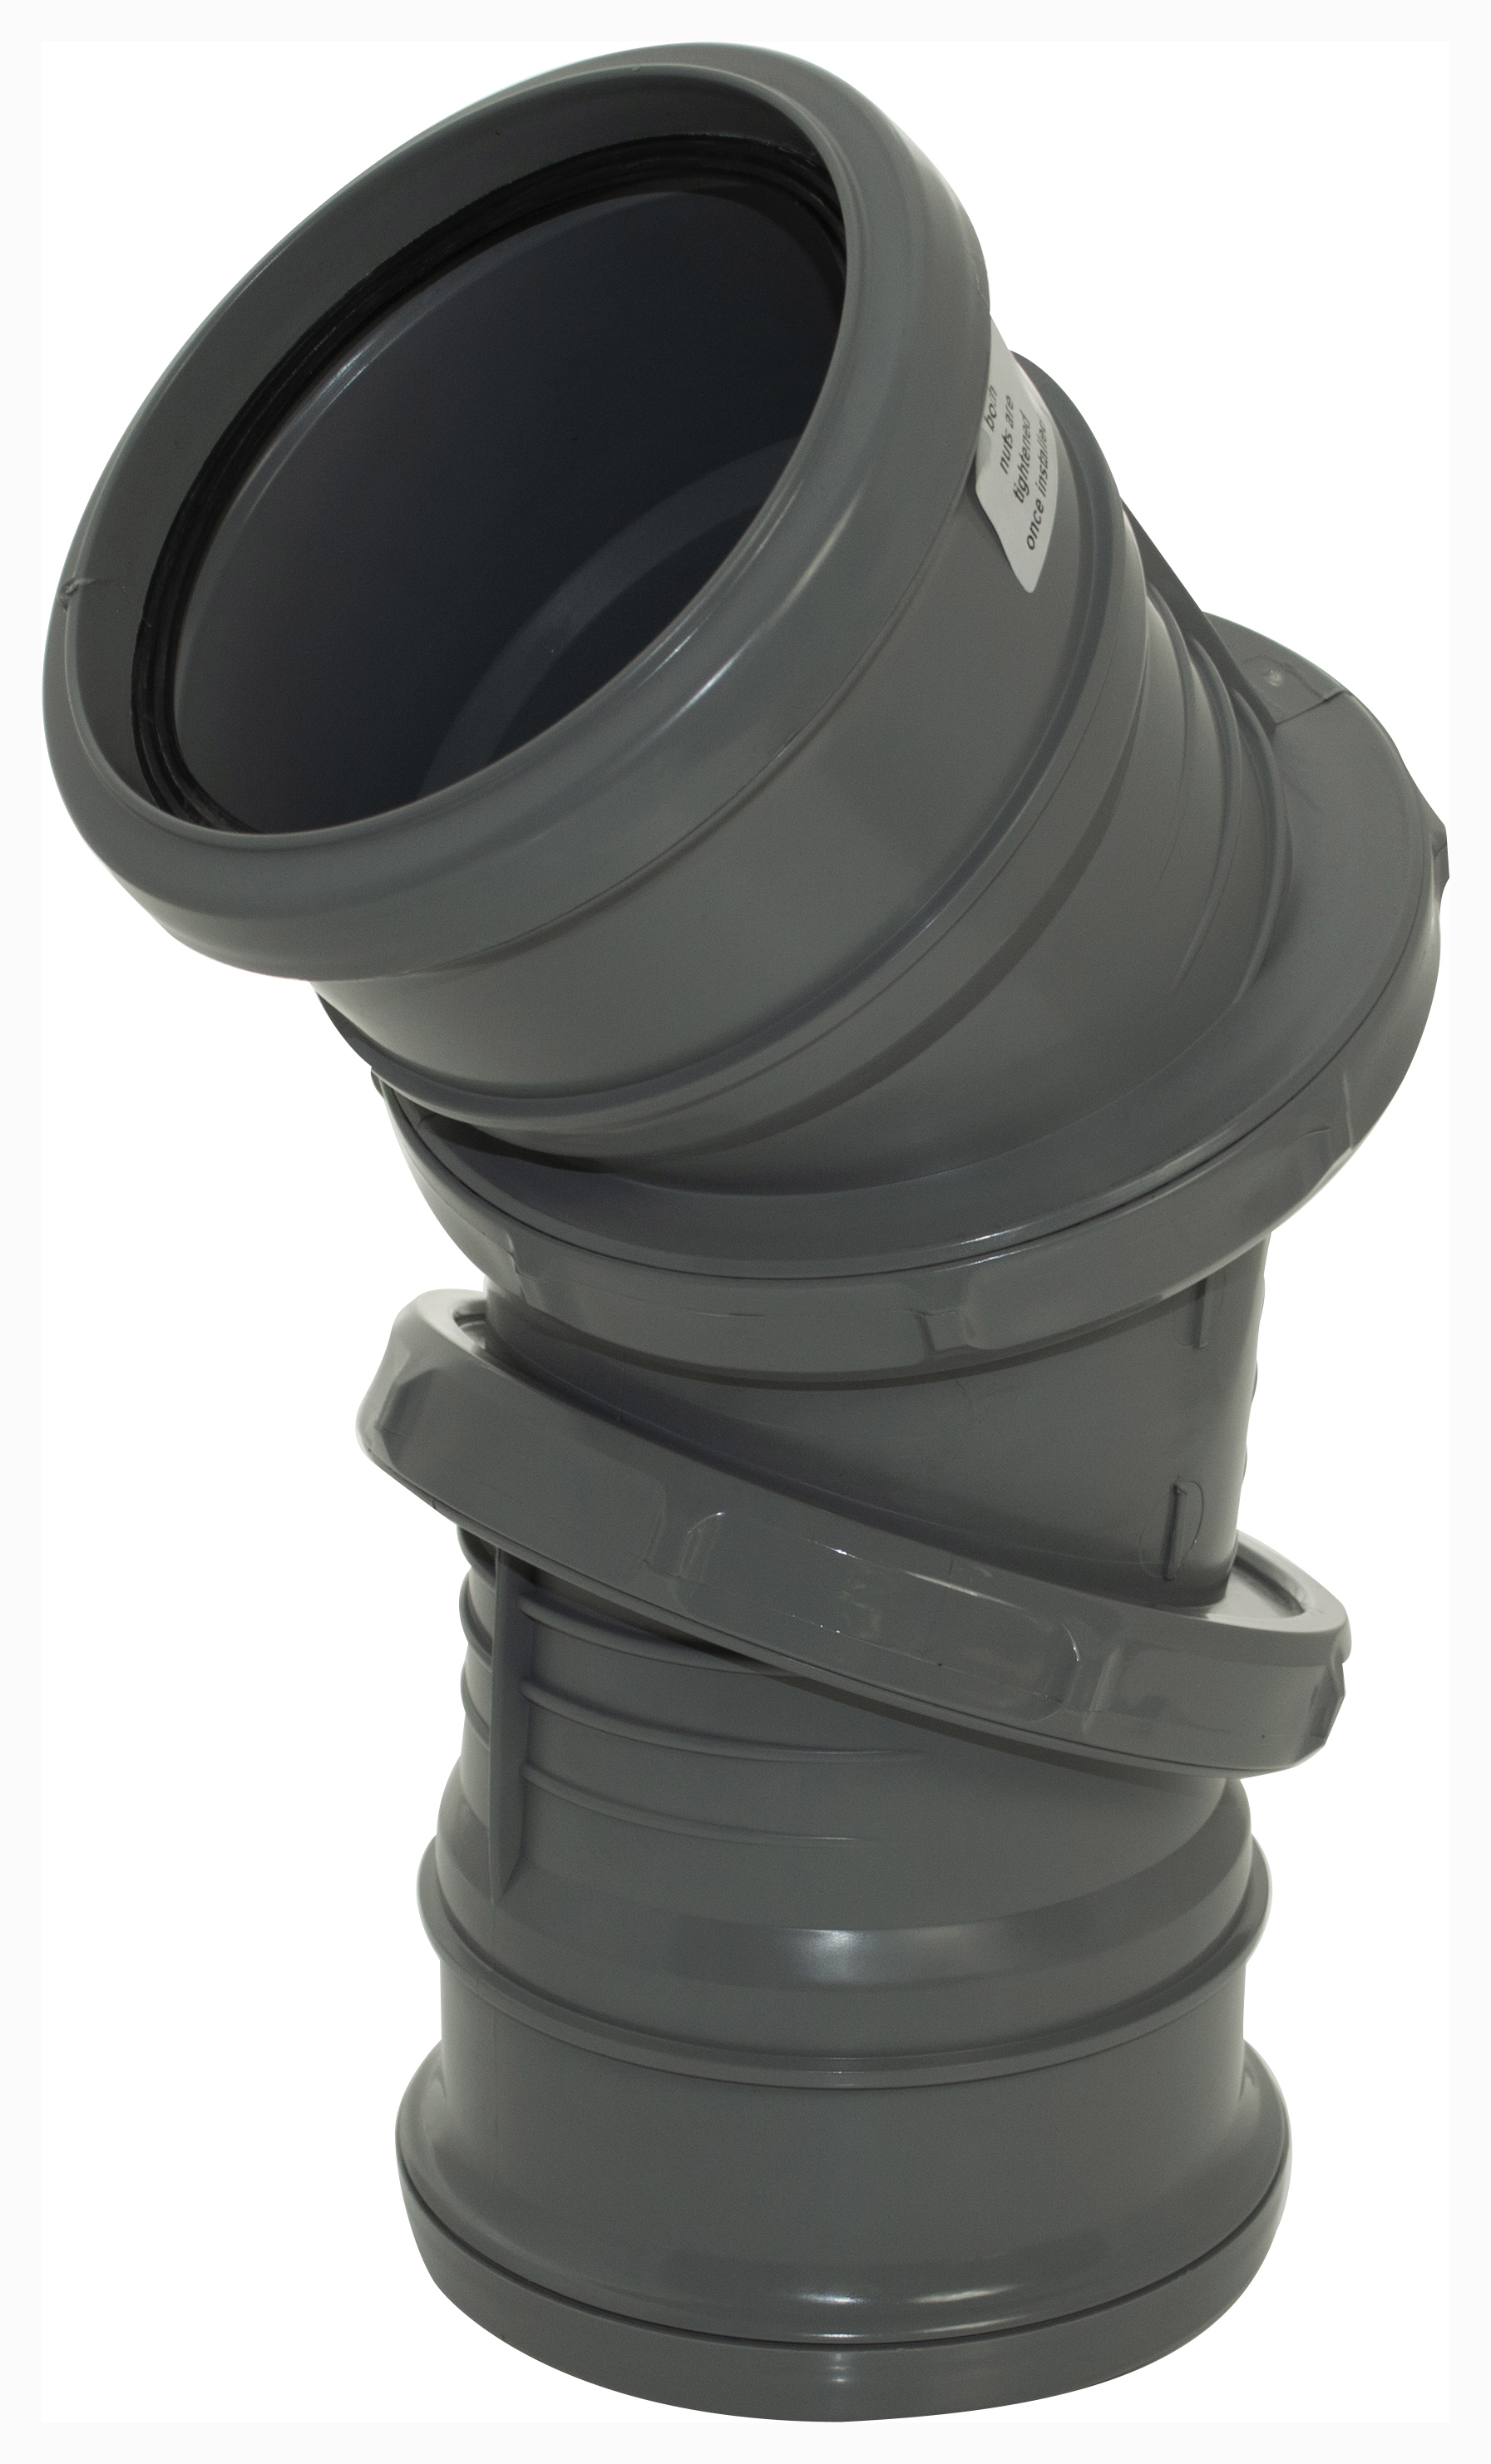 Floplast 110mm Soil Pipe Adjustable Bend Double Socket 0 to 90 - Anthracite Grey SP560AG